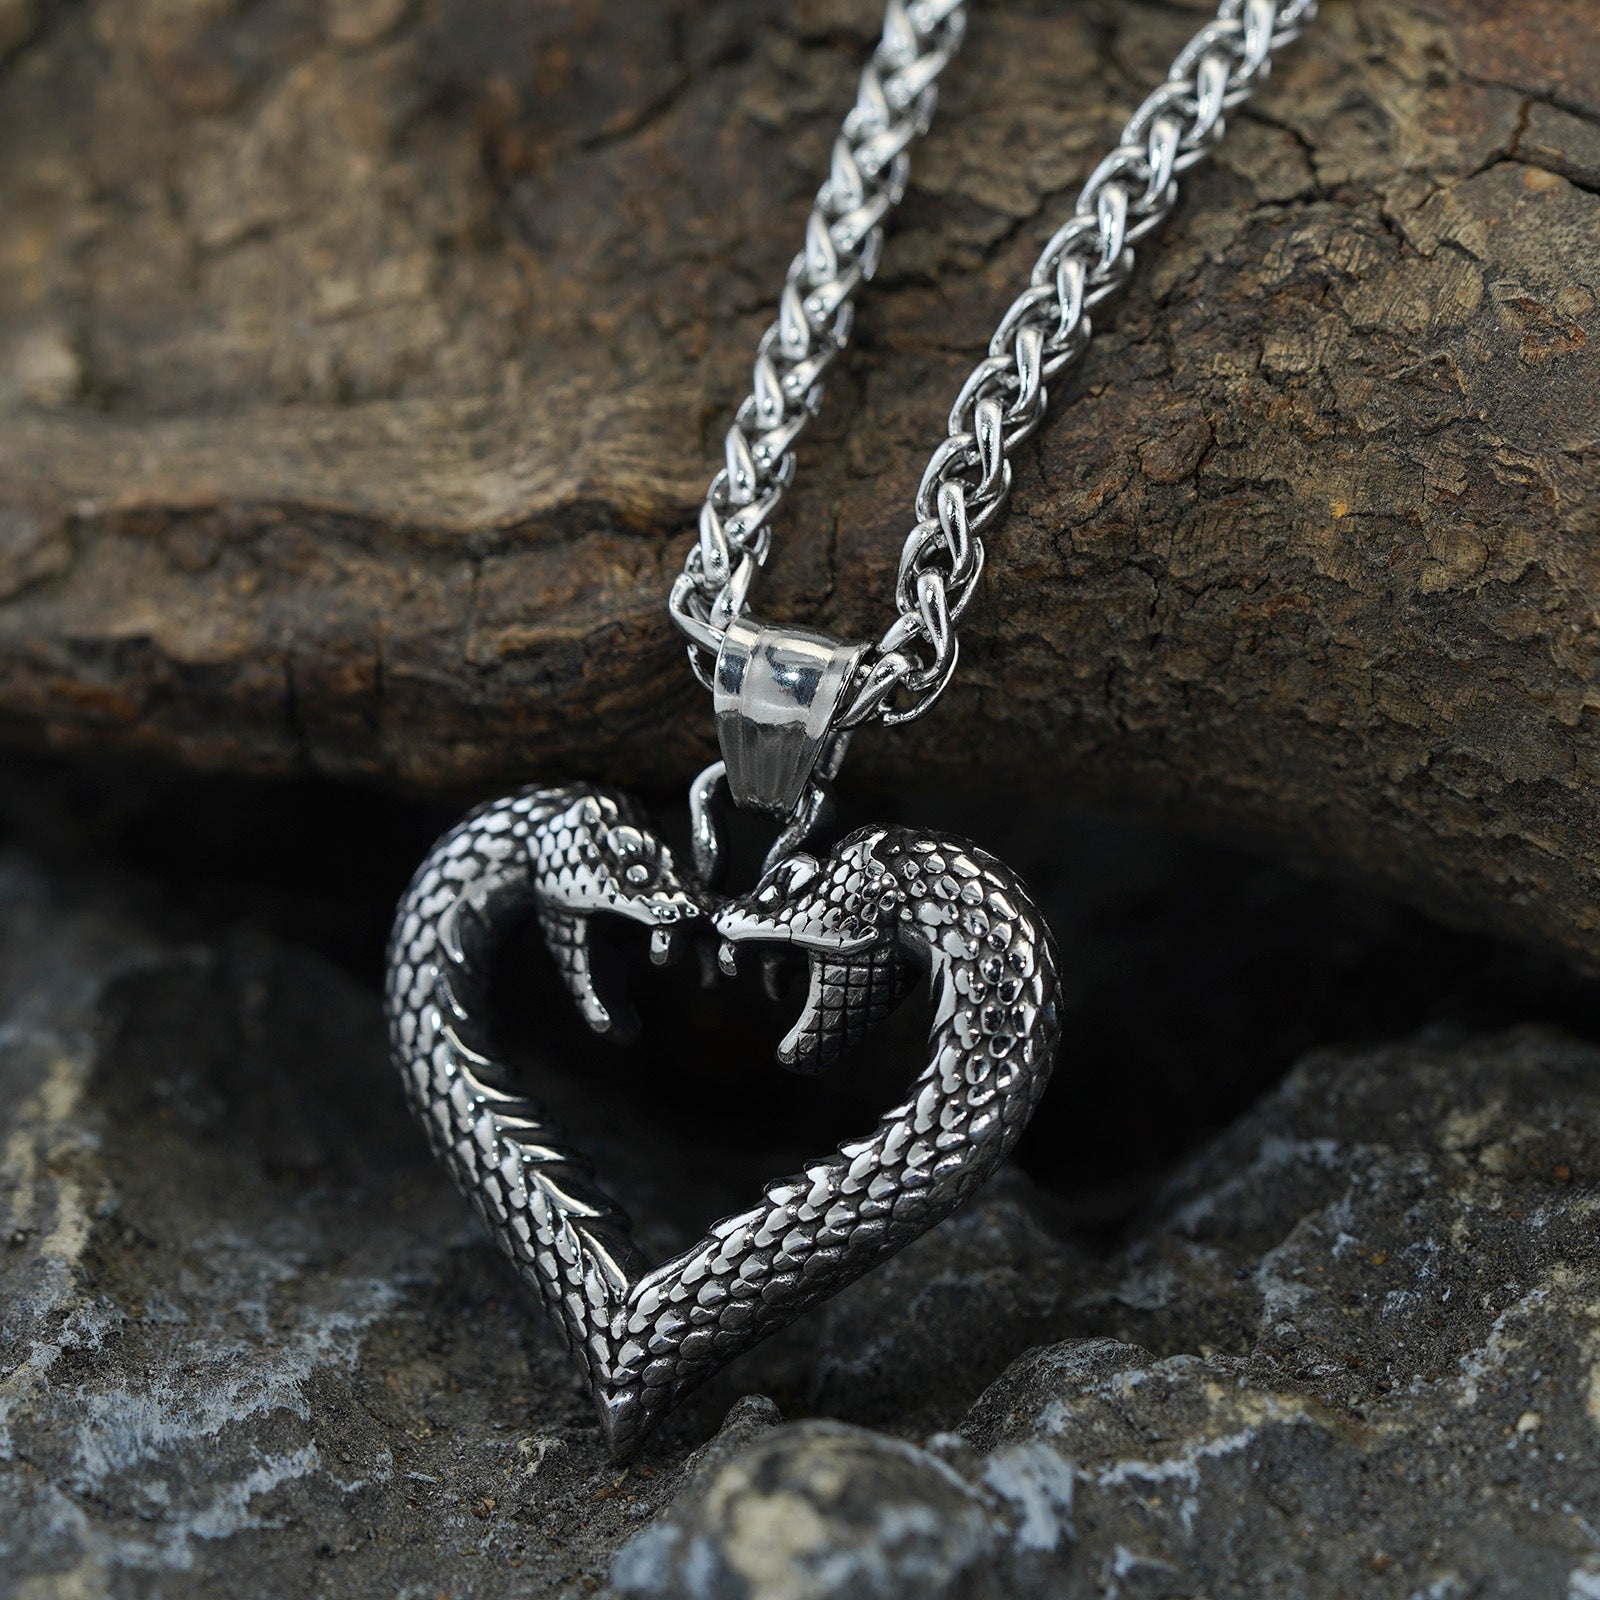 Cobra Snake Heart Pendant Necklace